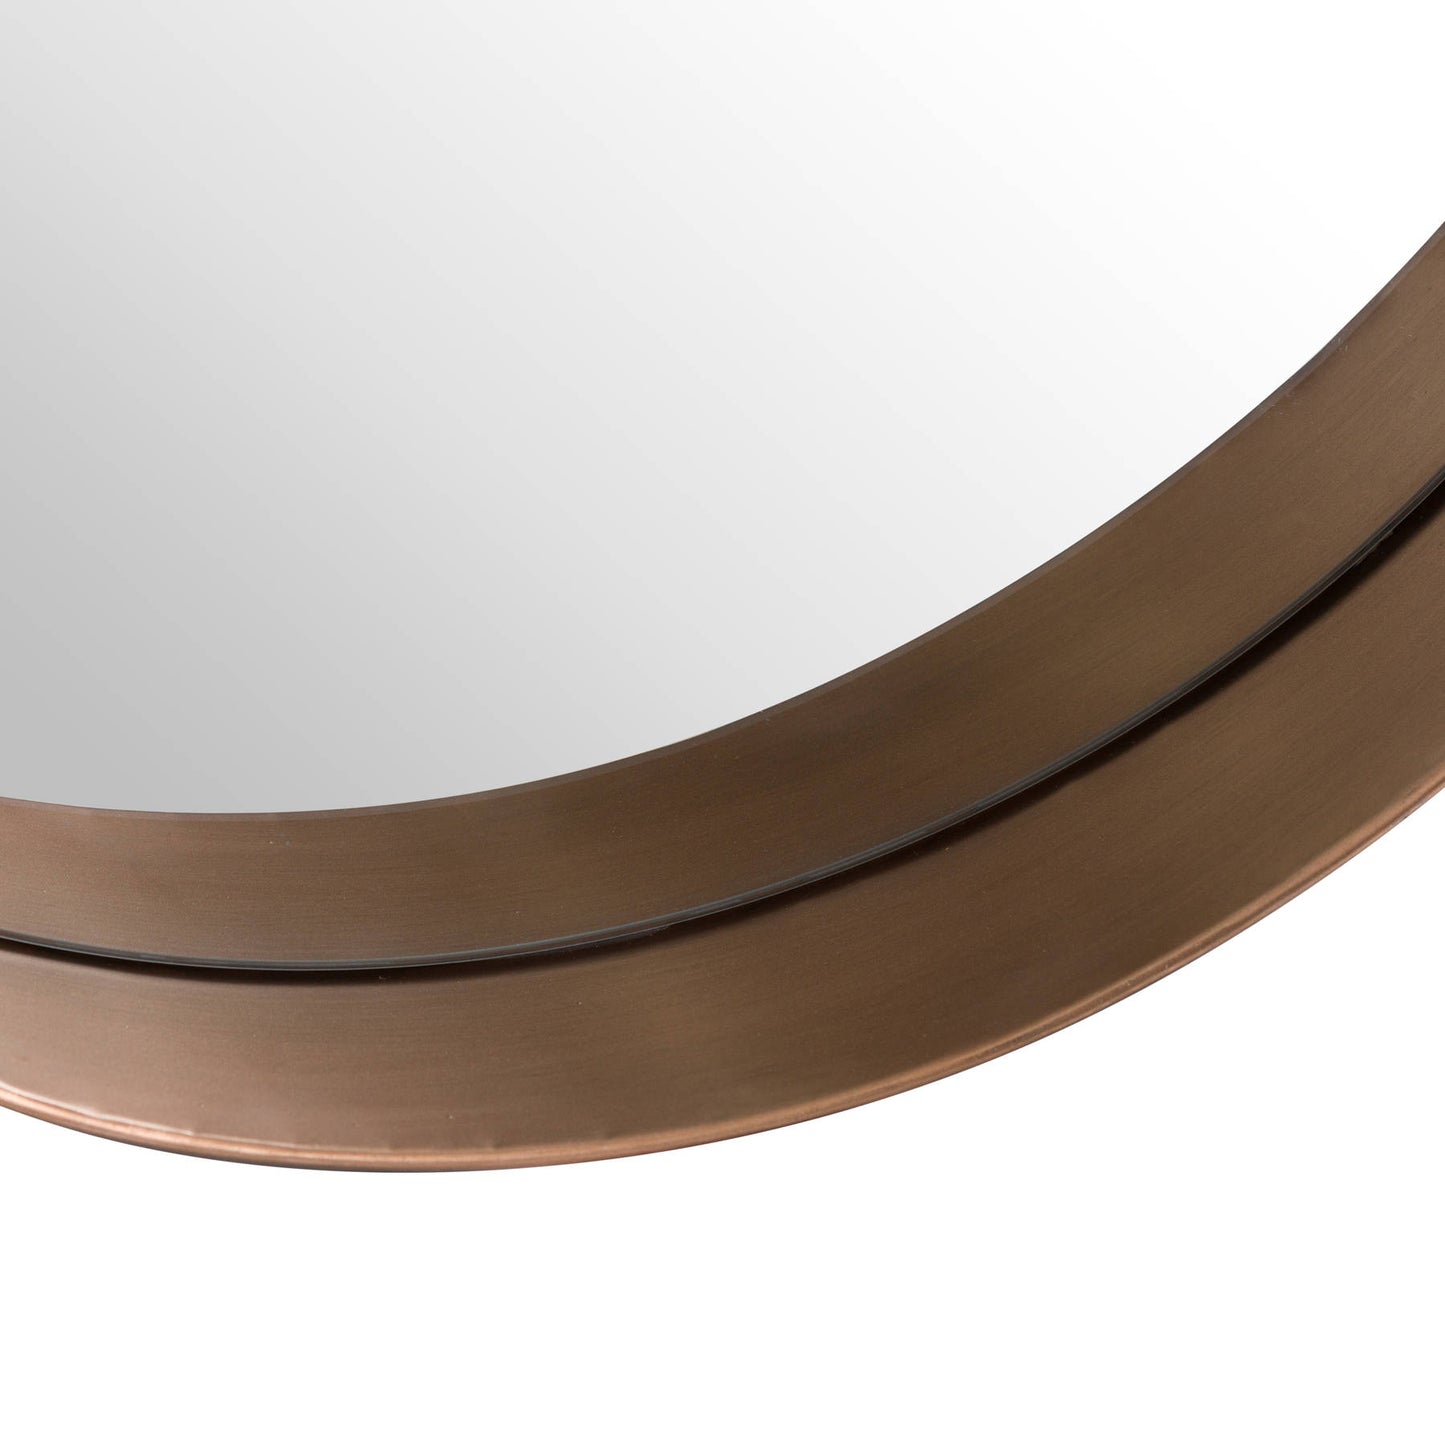 Circular Copper Finish Mirror With Protruding Edge